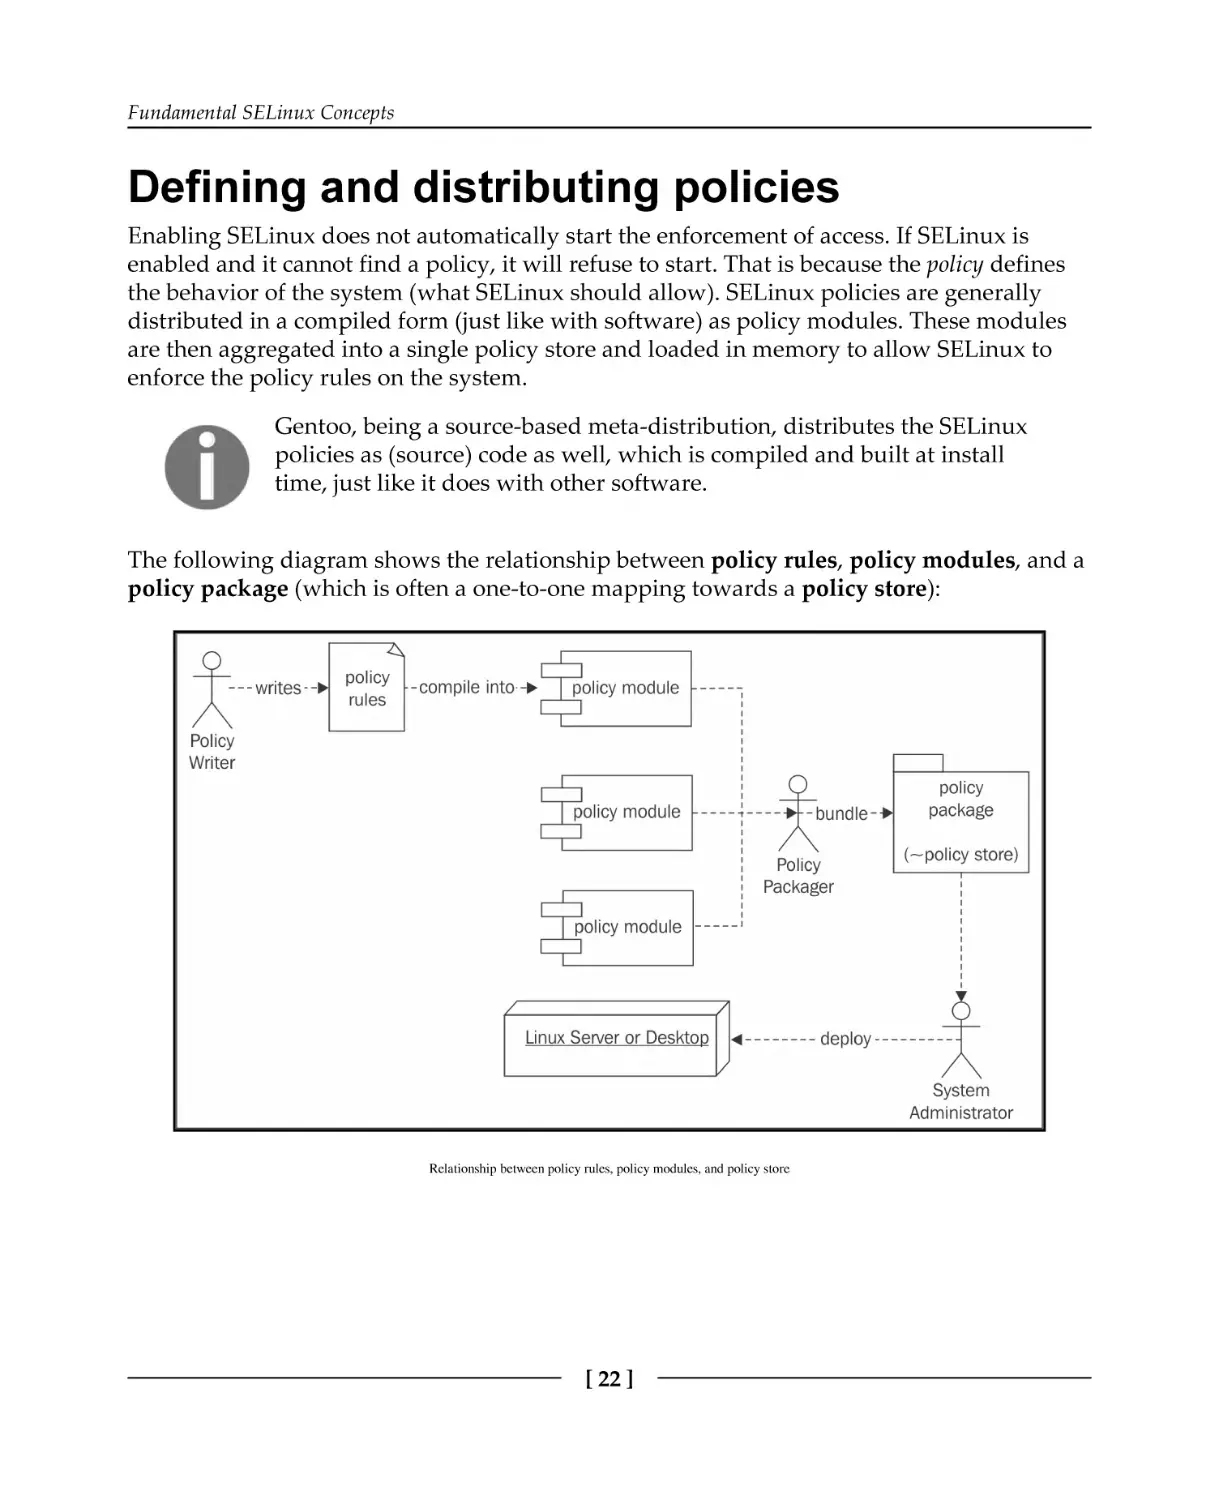 Defining and distributing policies